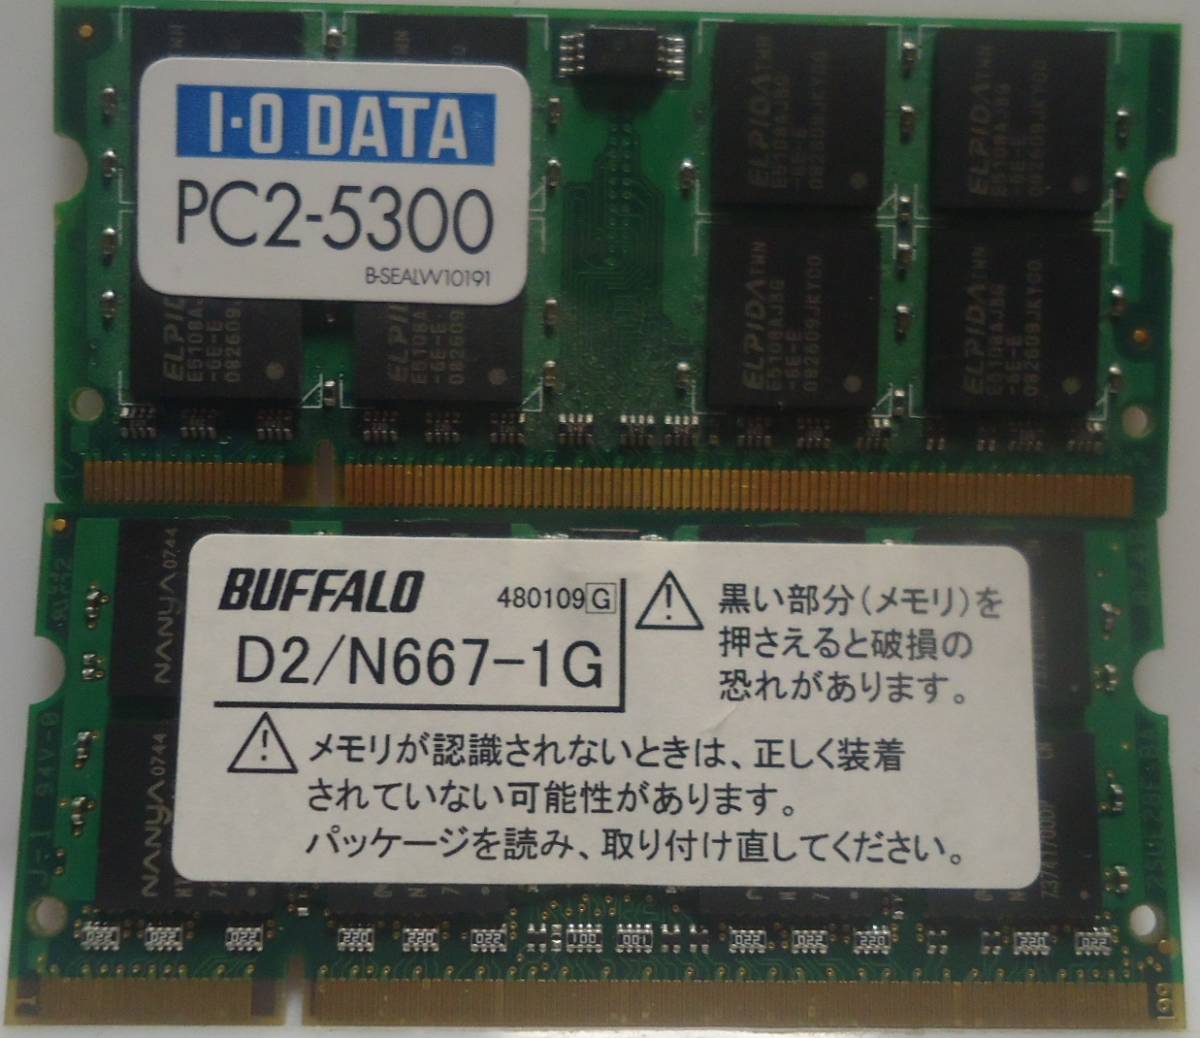 I/O DATA SDX667-1G 2R(両面型) + BUFFALO D2/N667-1G 2R(両面型) DDR2 PC 5300 計2GB ノートPC用 メモリ _画像1